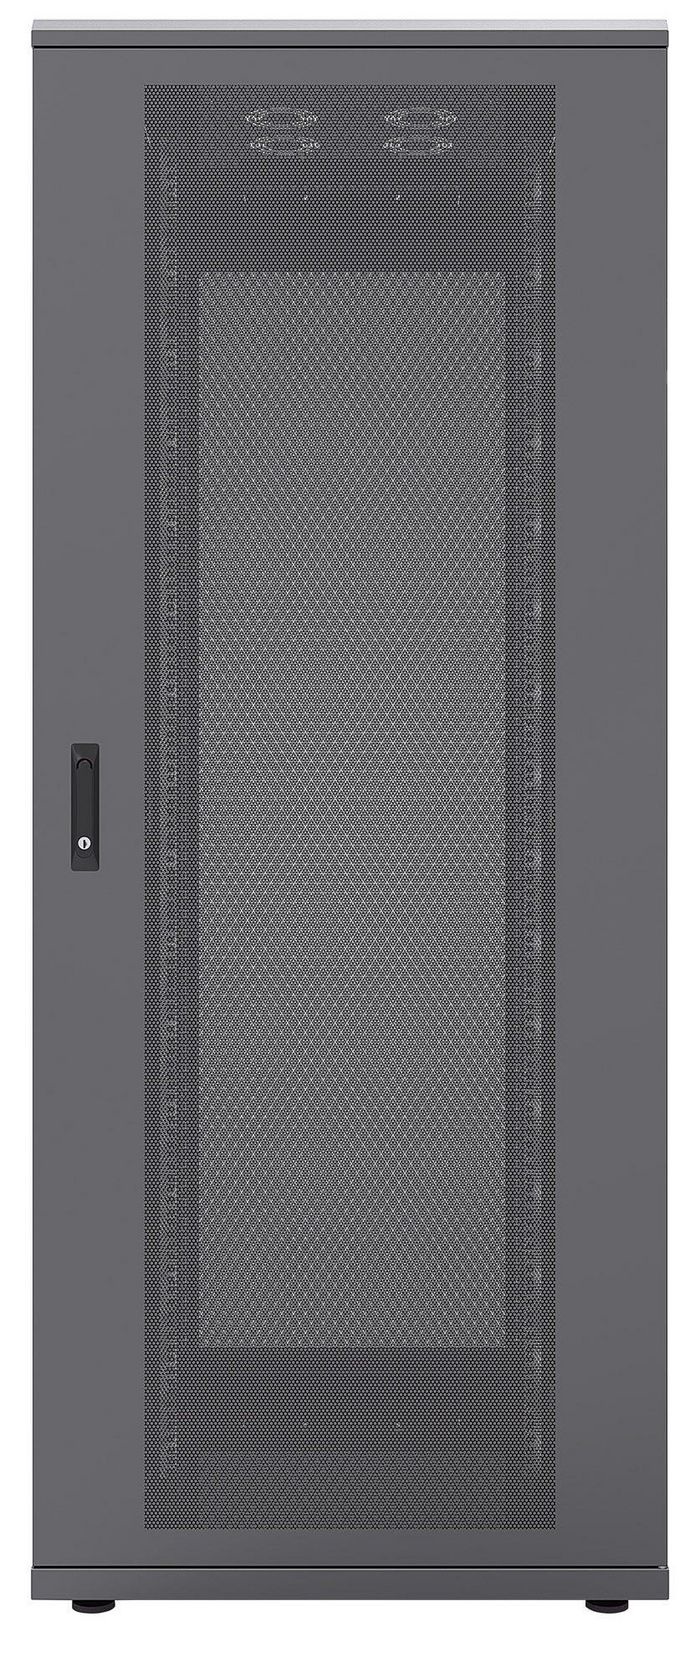 Intellinet 19" Server Cabinet, 47U, 2250 (h) x 800 (w) x 1200 (d) mm, IP20-rated housing, Max 1500kg, Flatpack, Black - W125081896